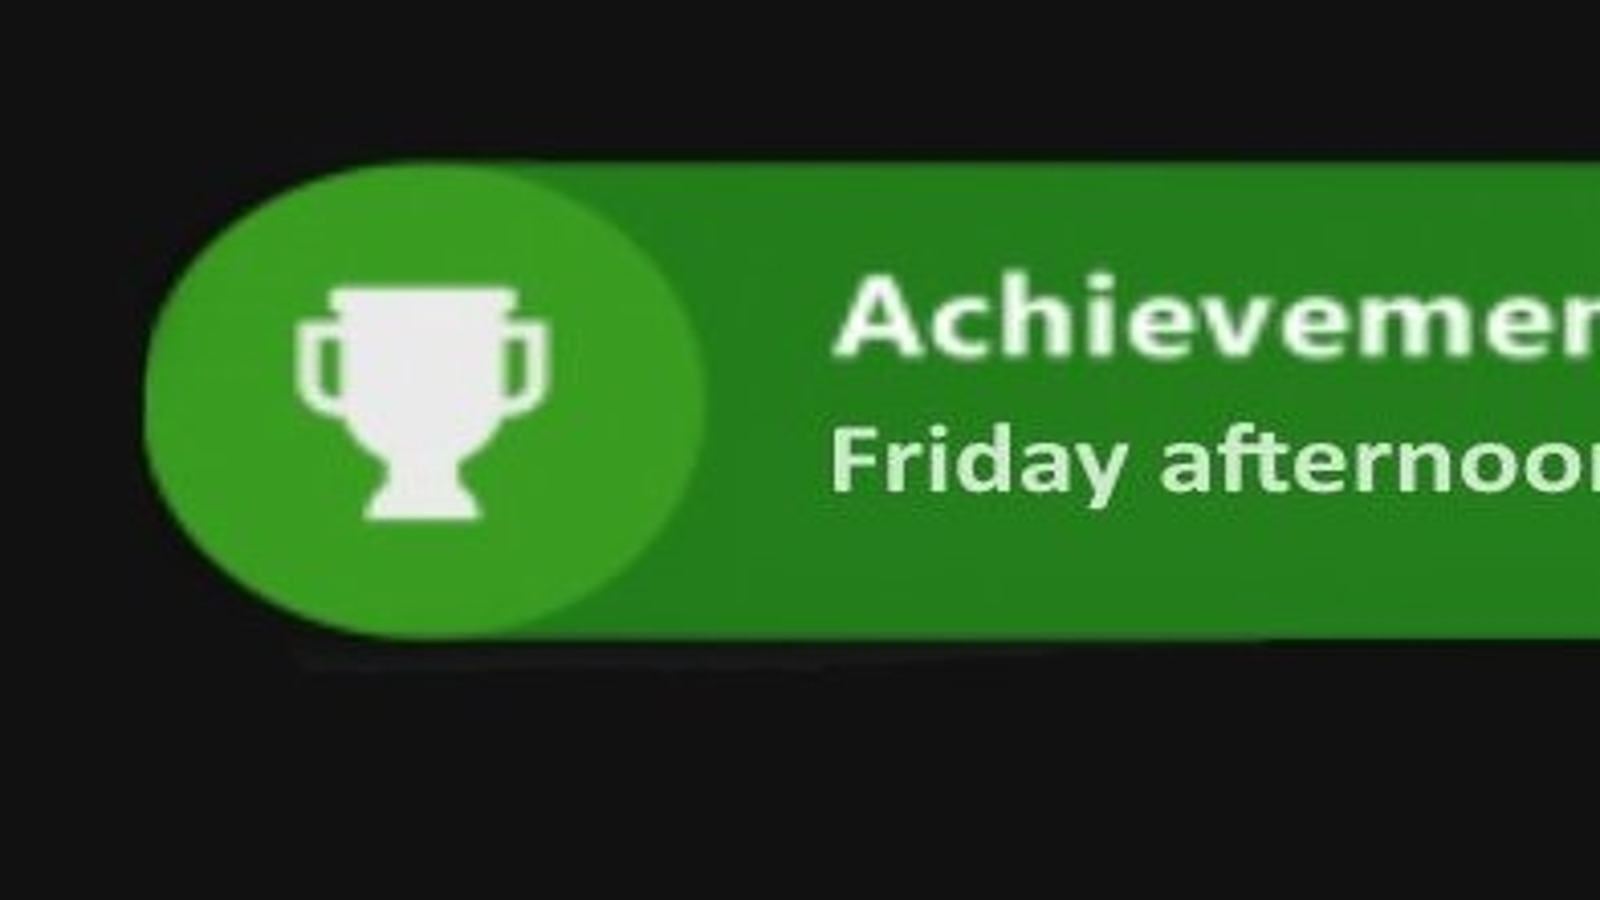 Xbox One achievement / Gamerscore service for various titles, all legit!